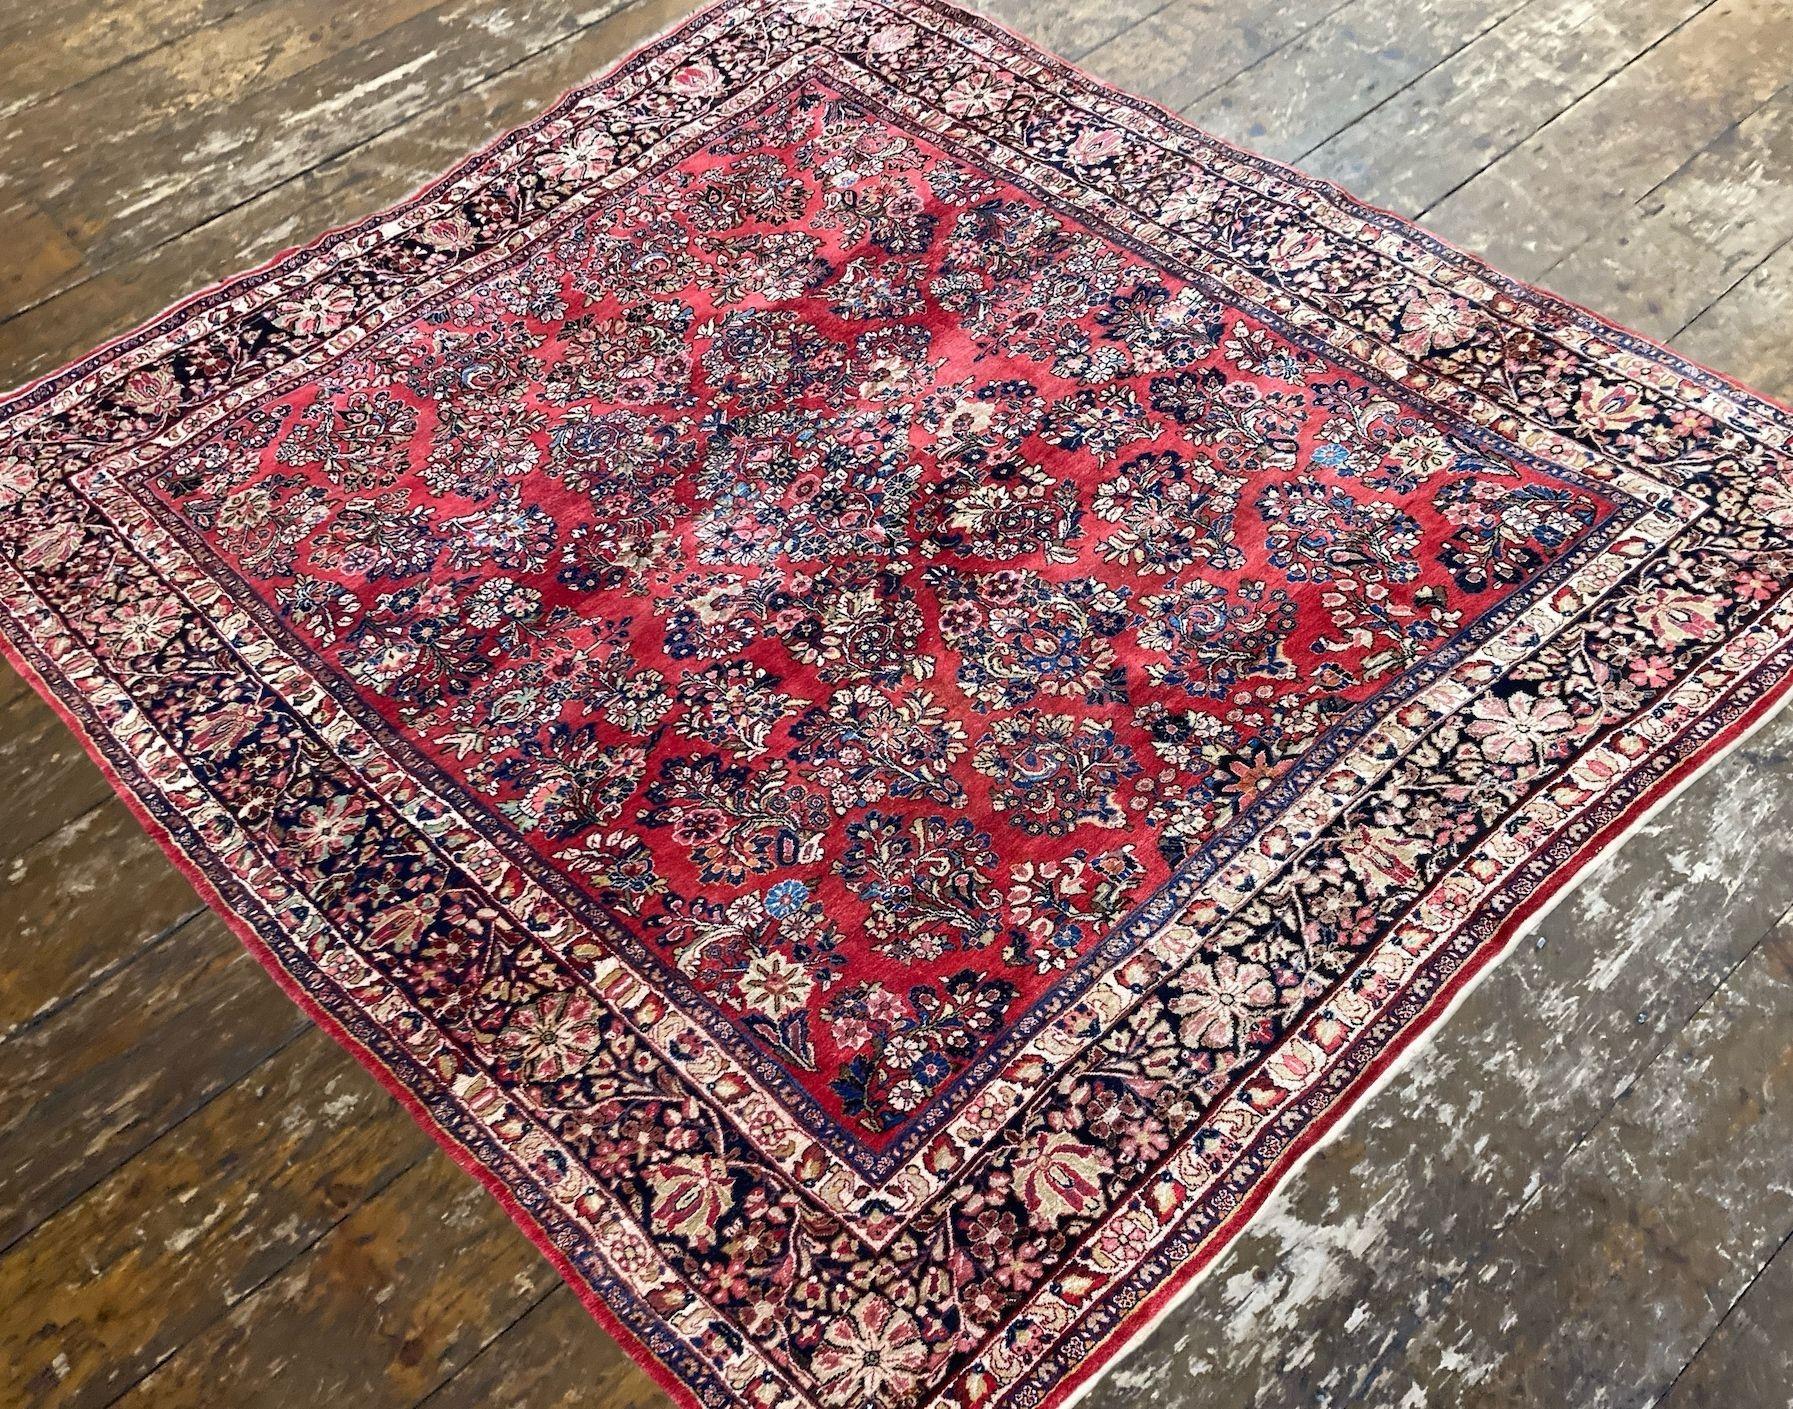 Wool Antique Sarouk Carpet 3.07m x 2.45m For Sale